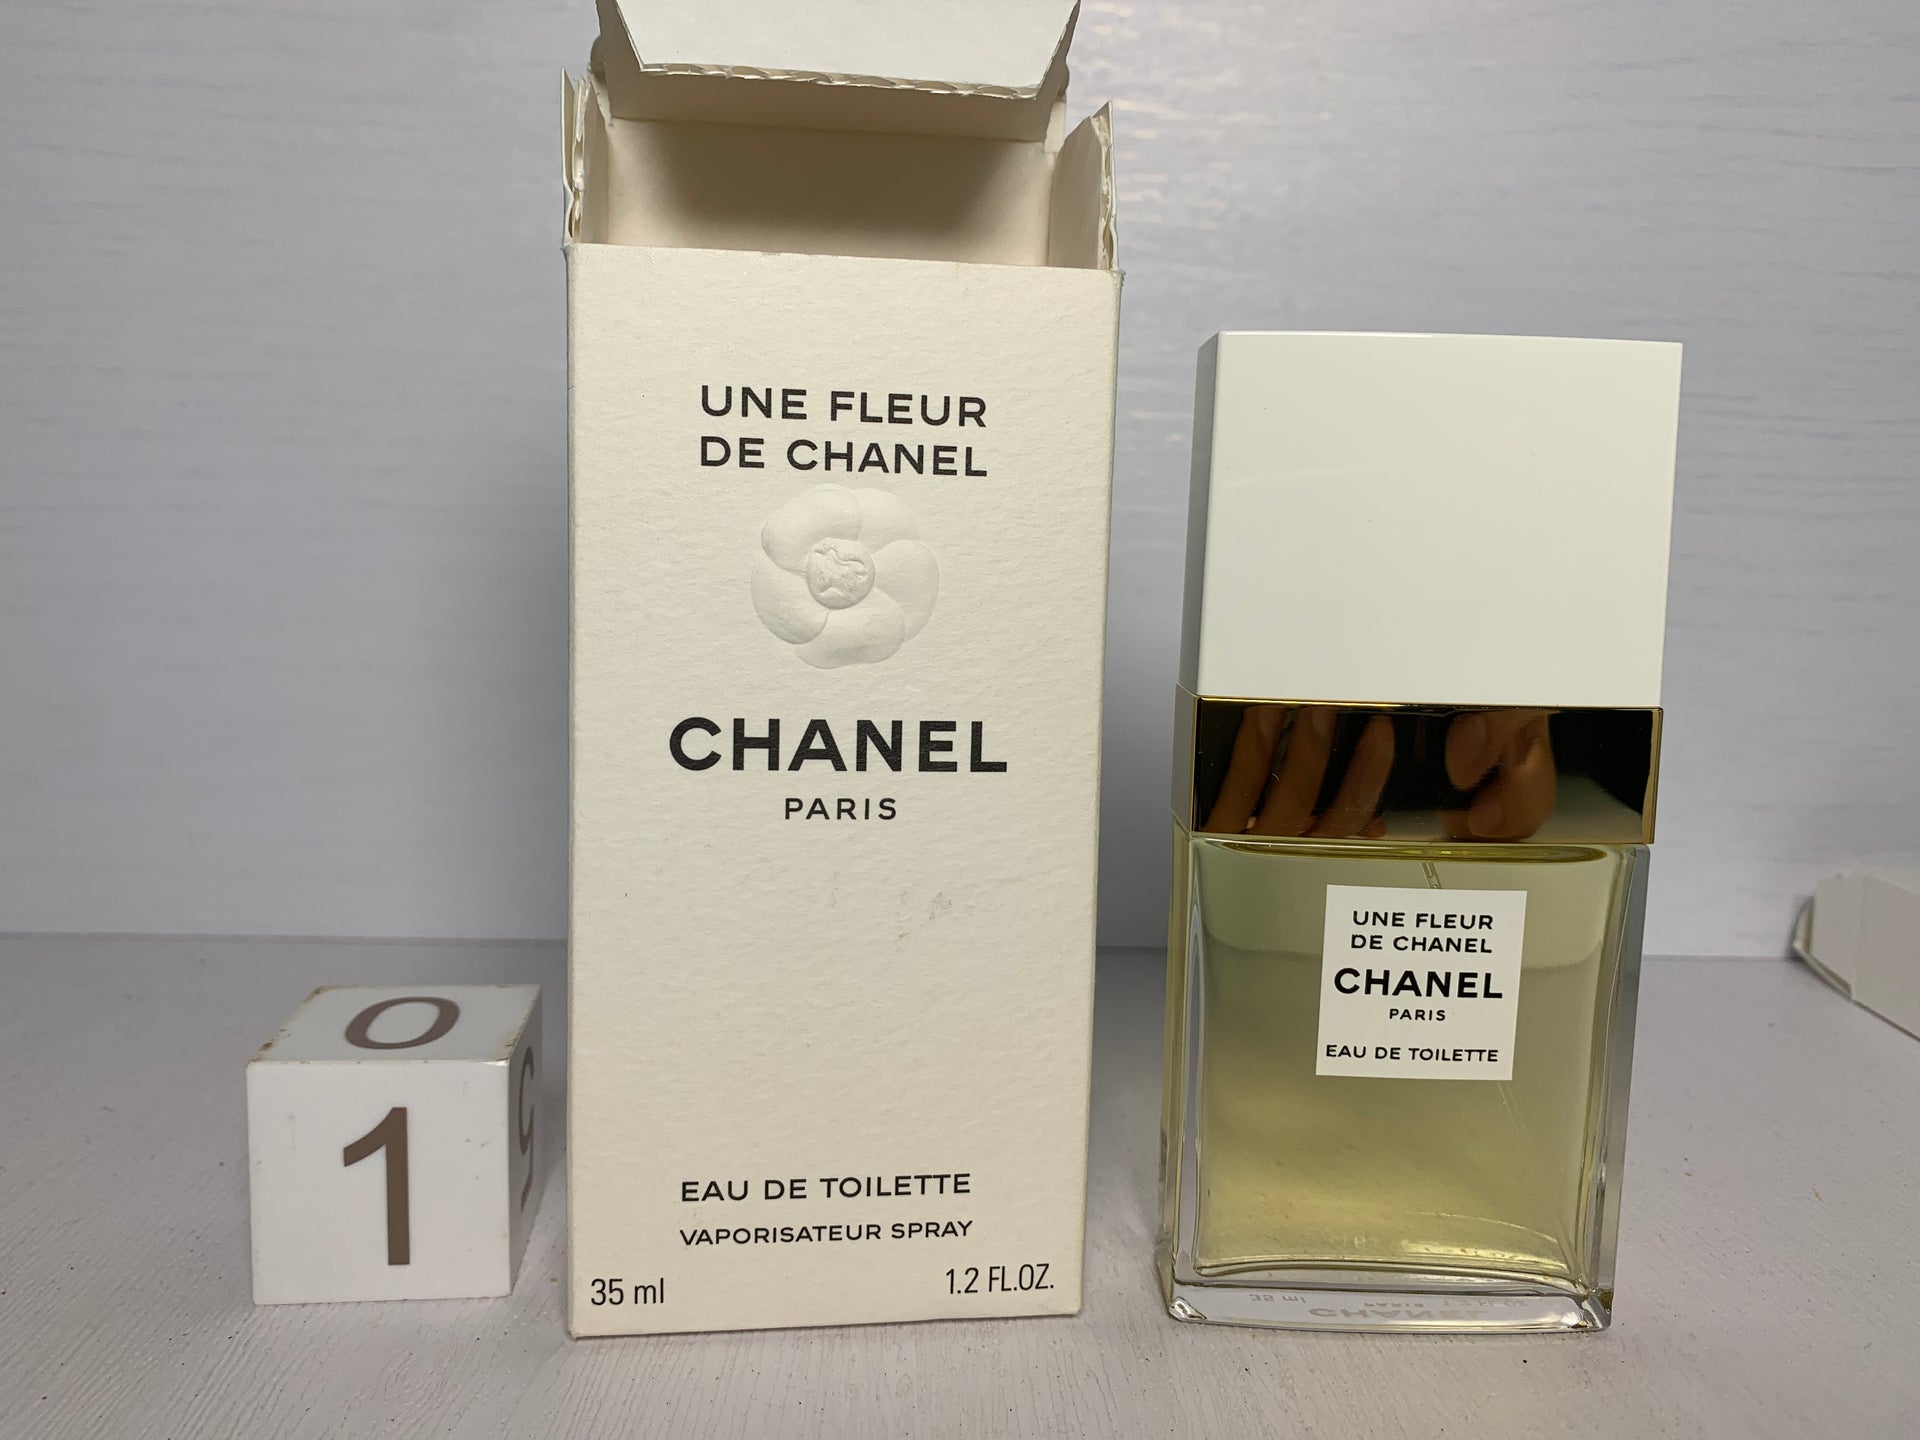 Chanel No 5 Paris Eau De Toilette 35ml 1.2 FL OZ. Perfume Spray